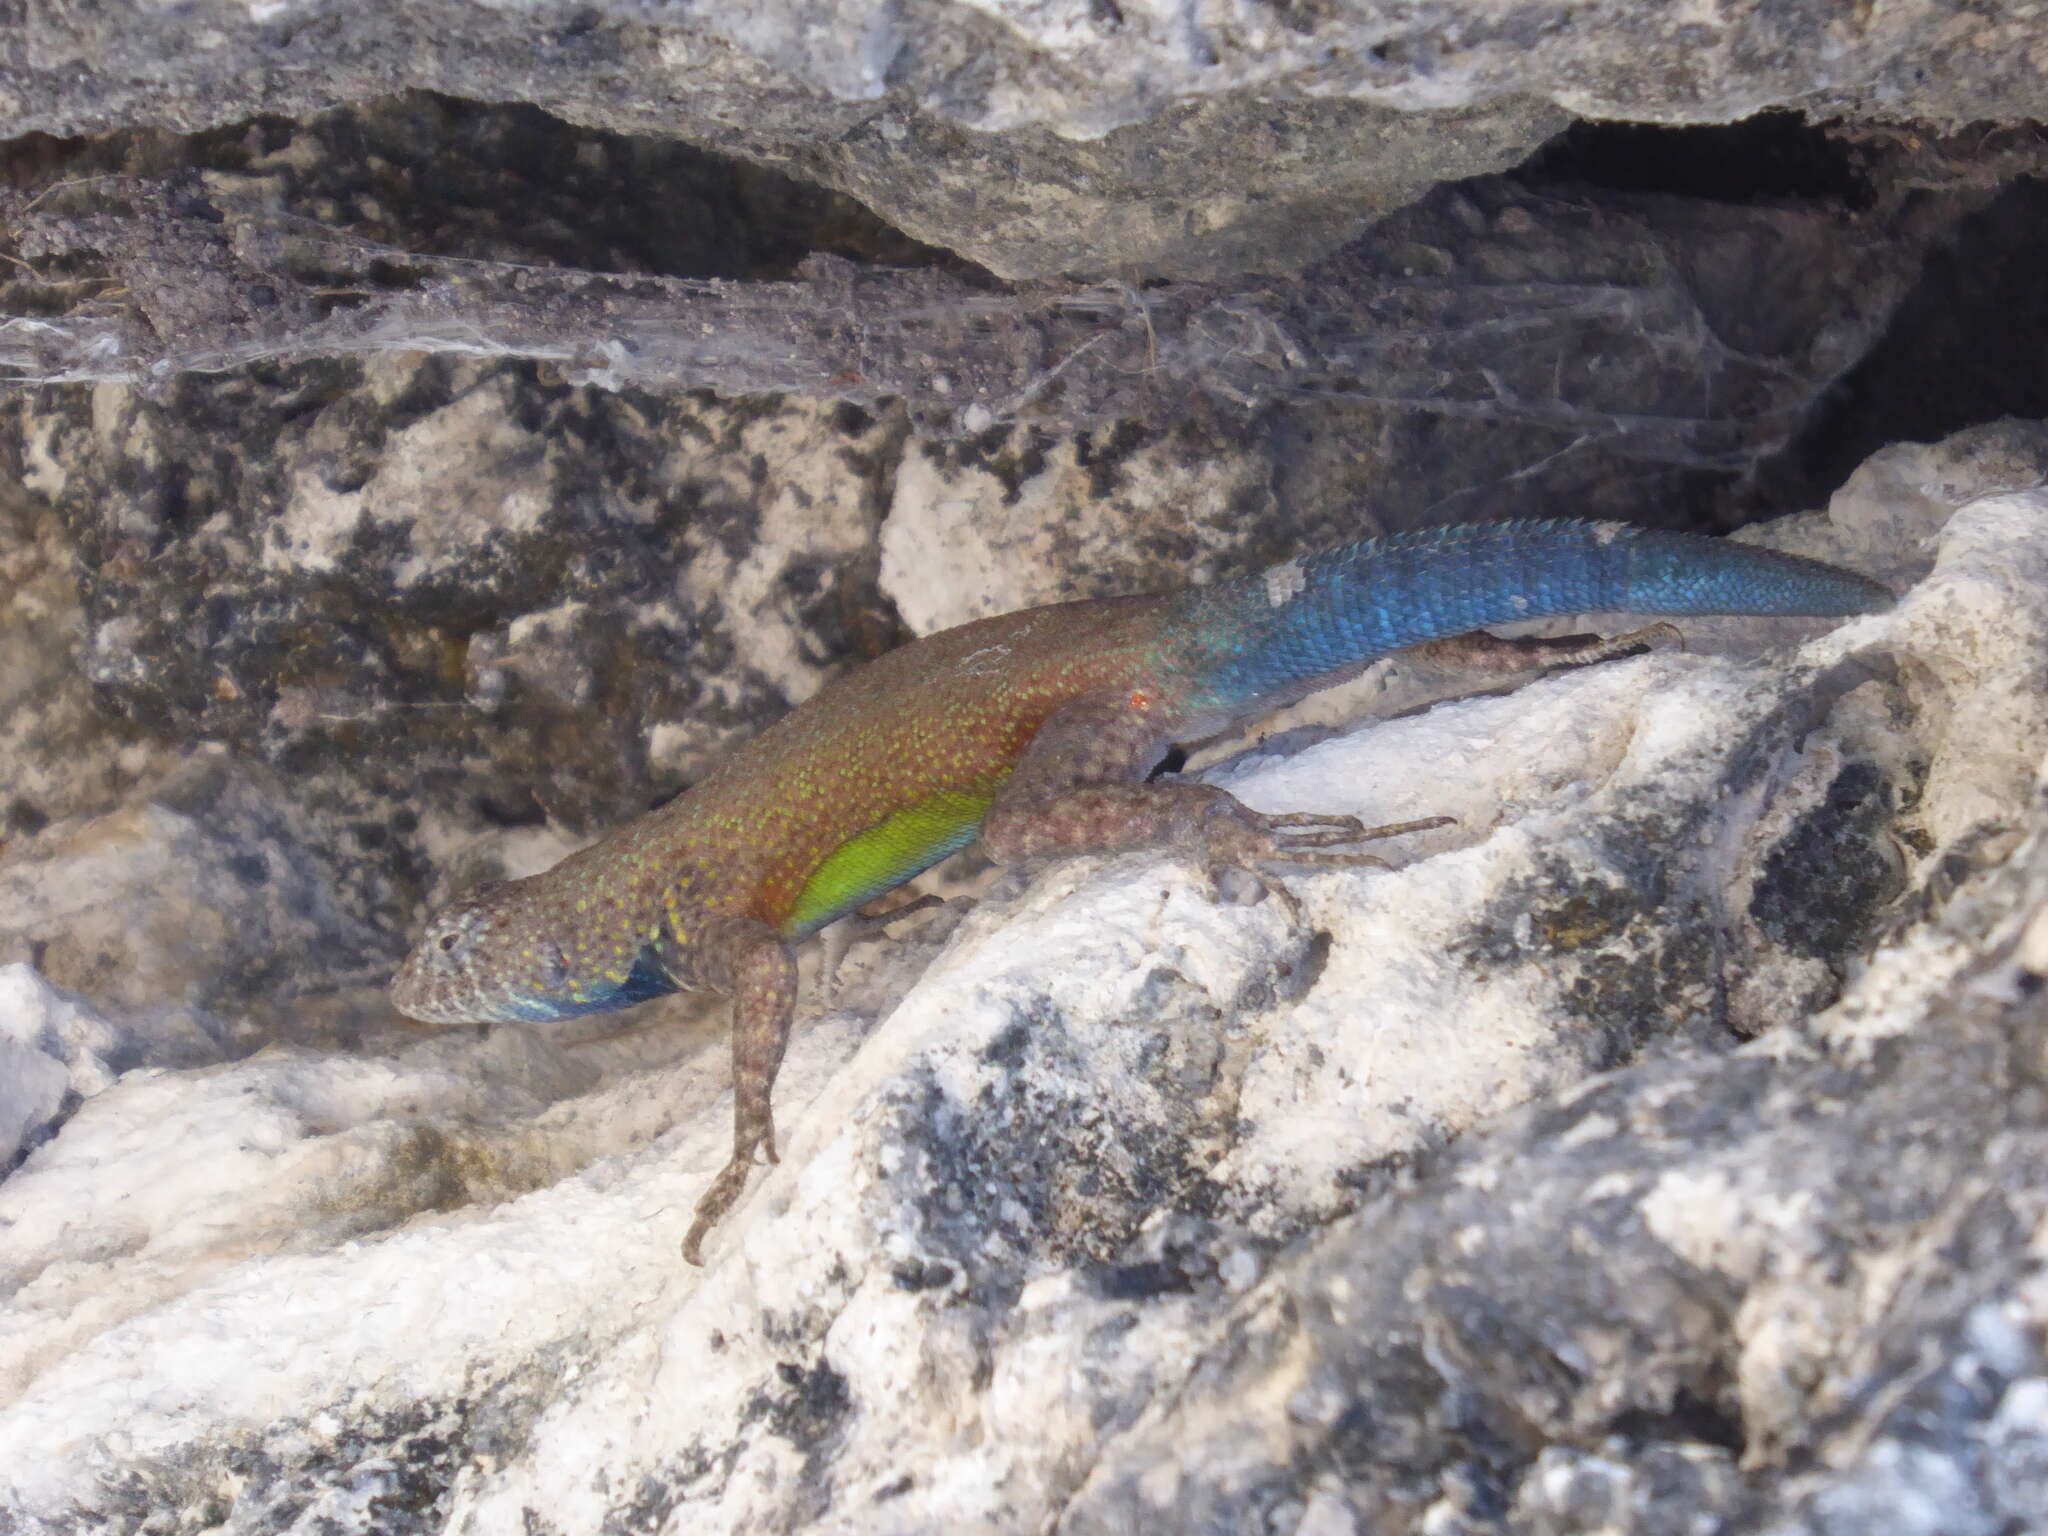 Image of Gadow's Spiny Lizard